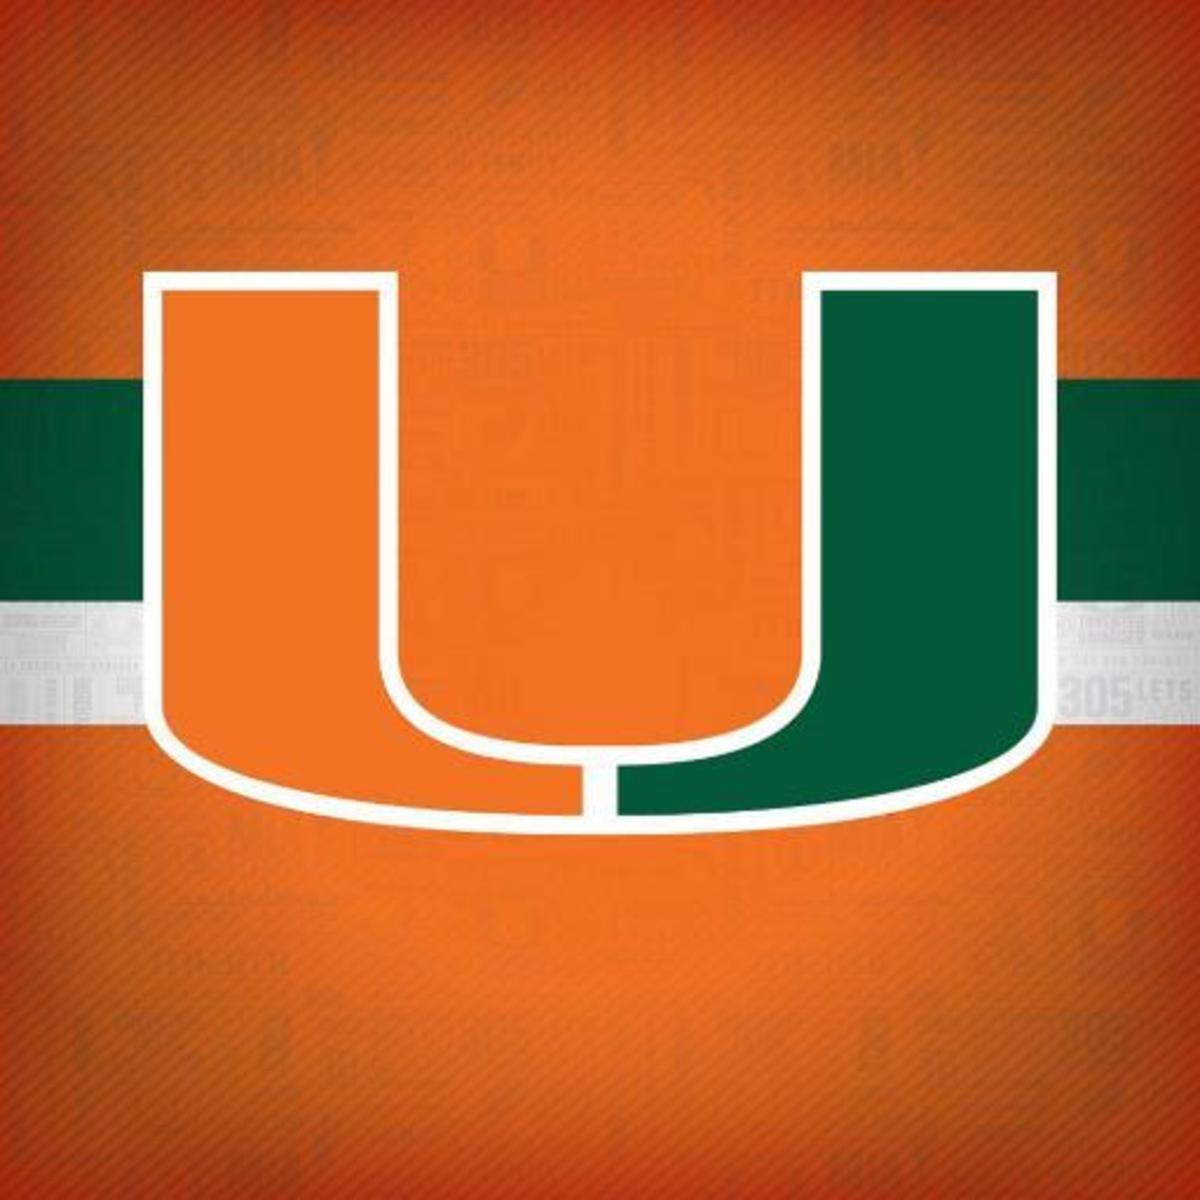 Miami logo Twitter picture.